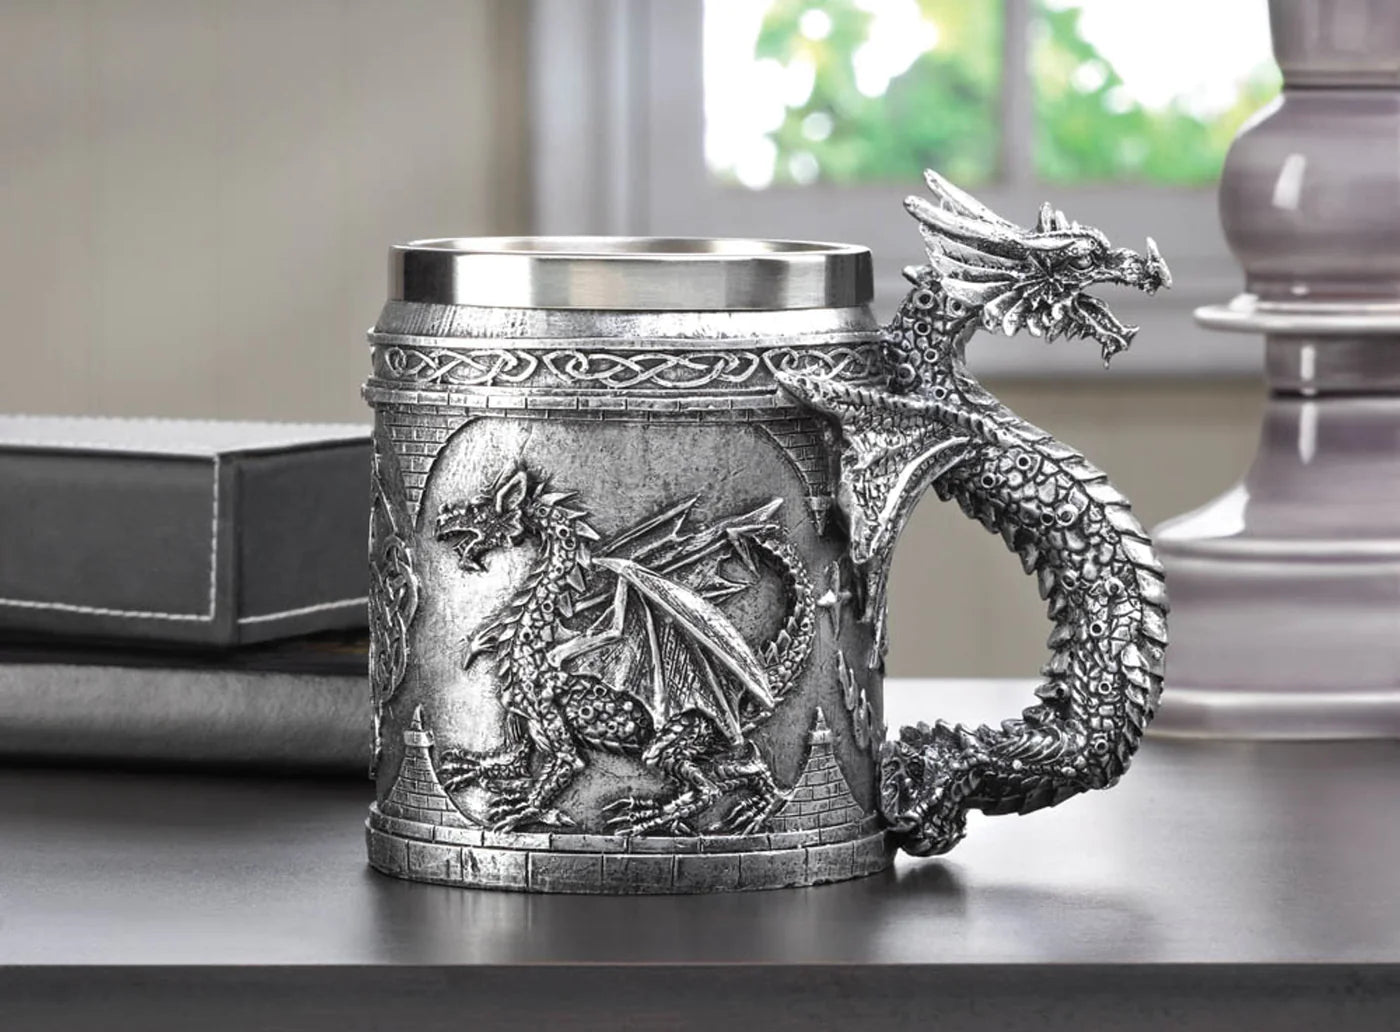 Serpentine Dragon Mug